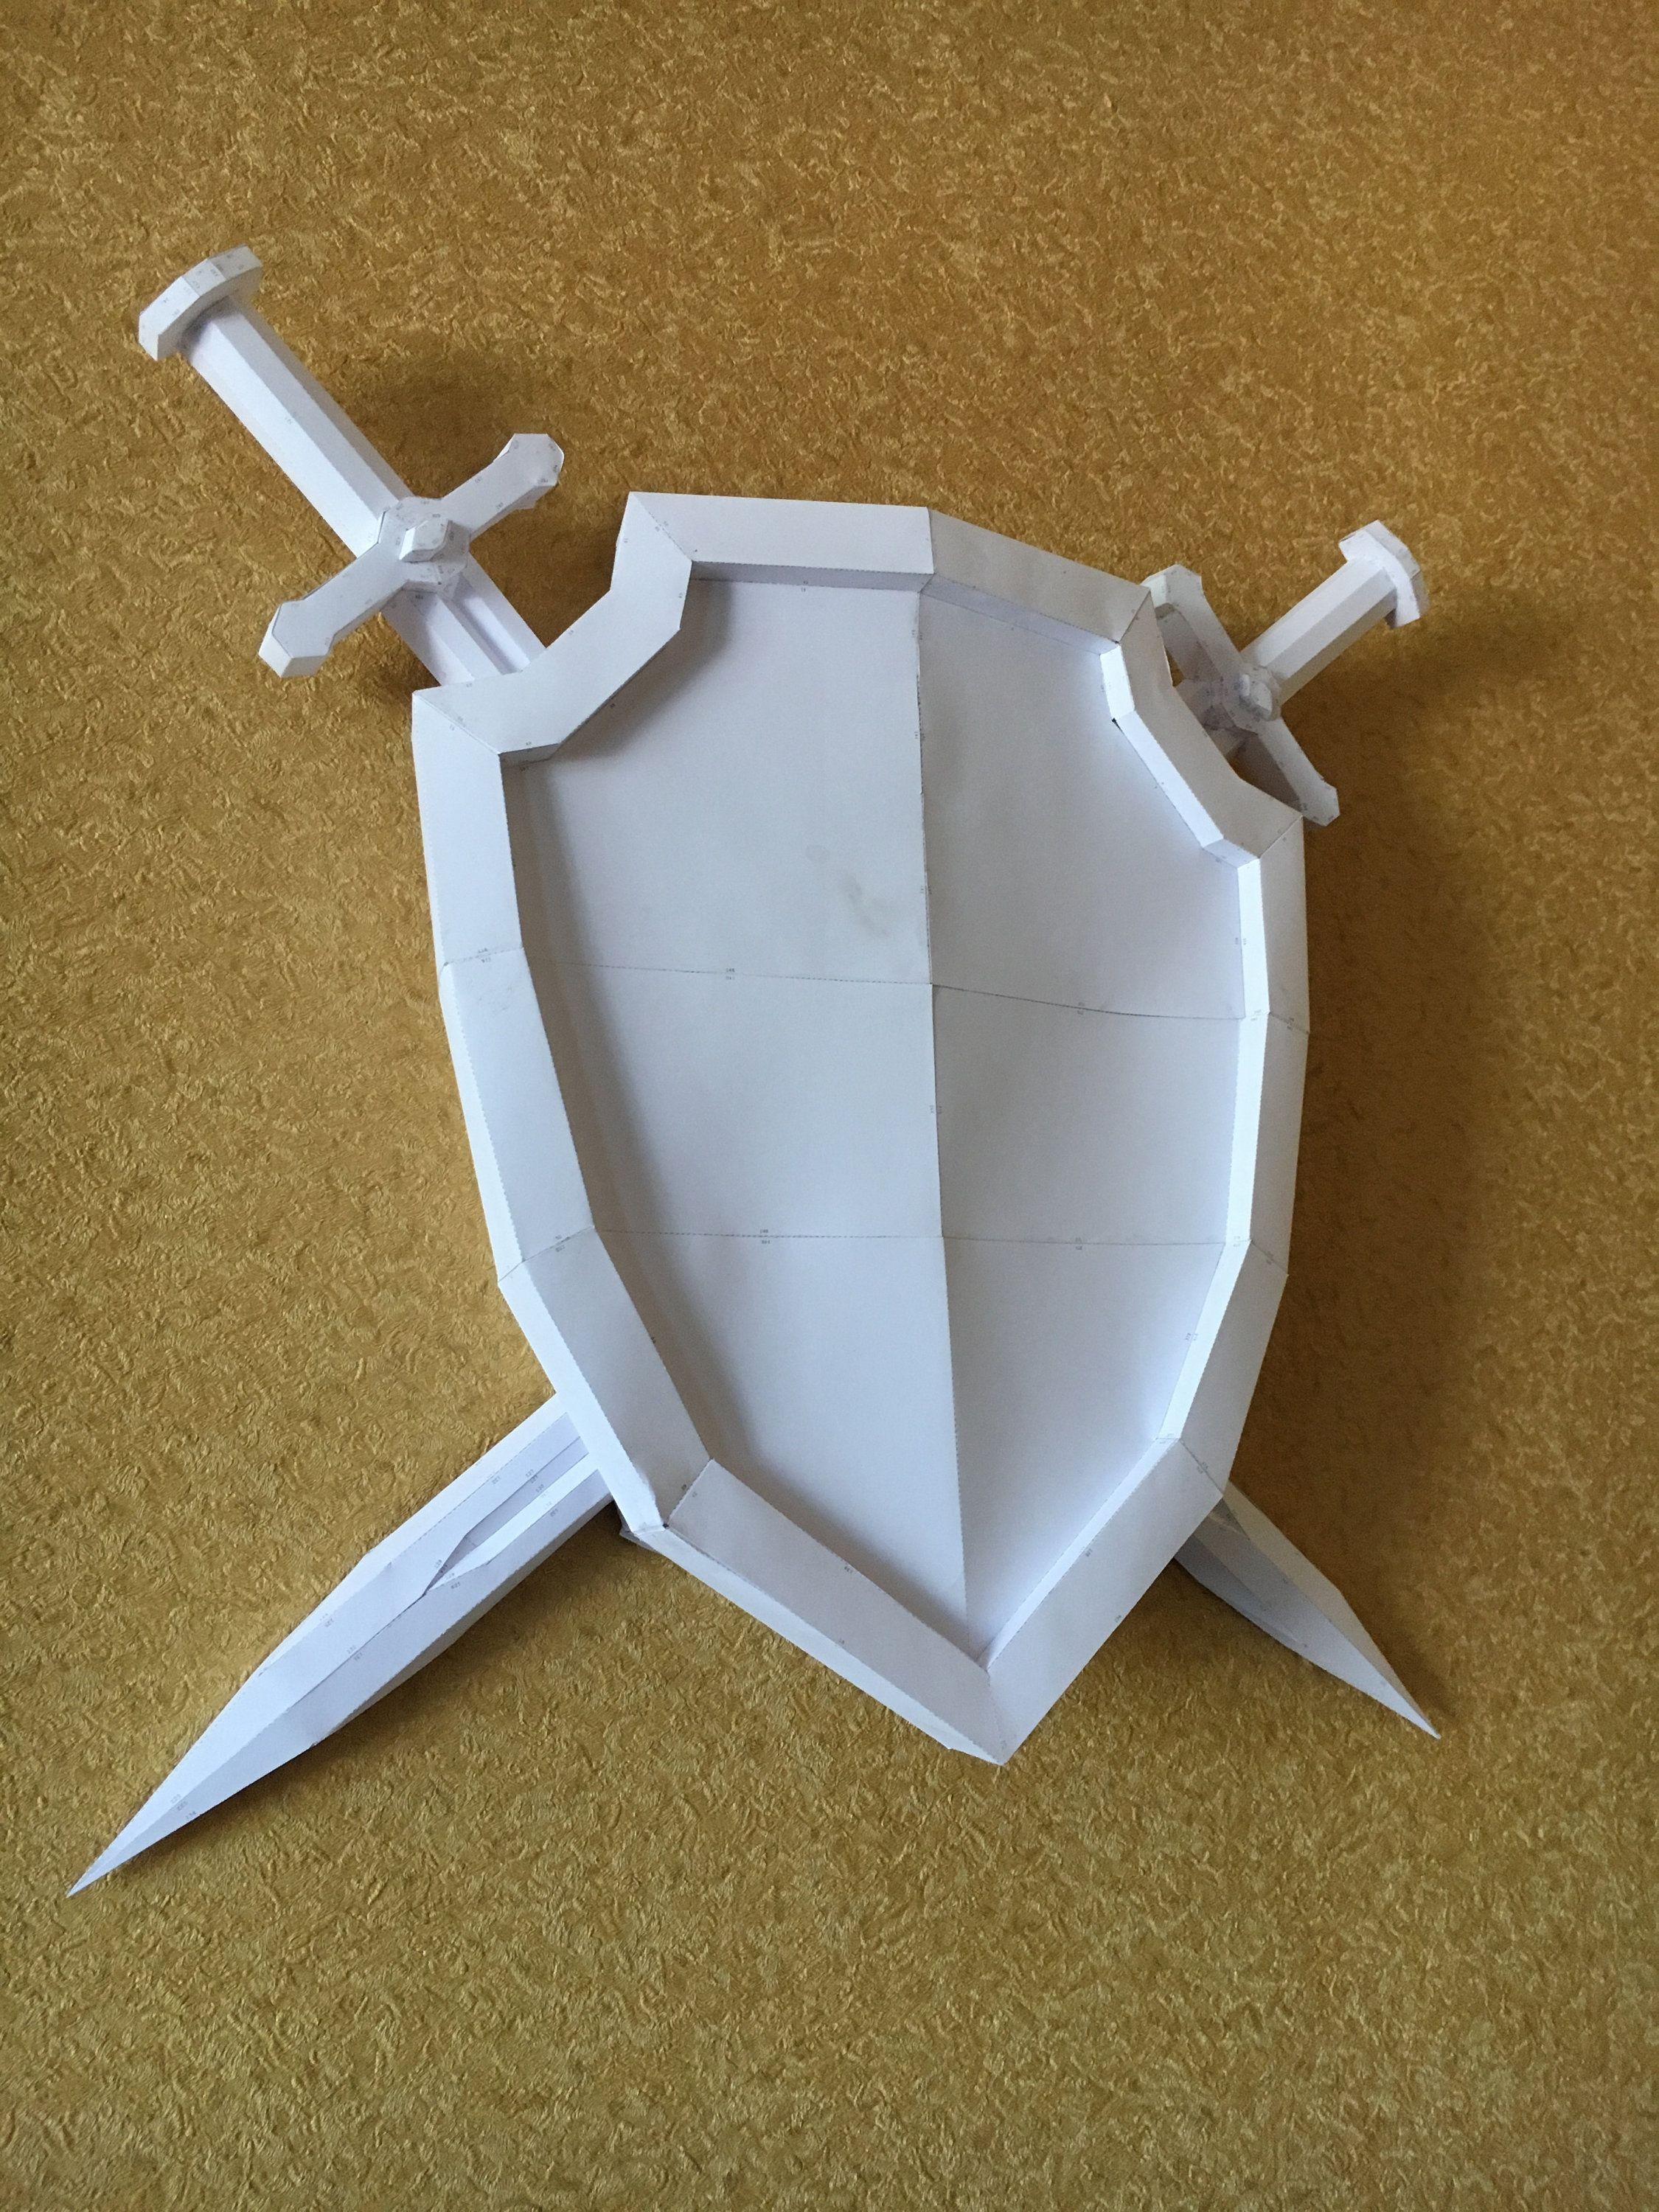 Wolf Papercraft Sword Shield Diy Papercraft Model ÐÑÐ¼Ð°Ð¶Ð½ÑÐµ Ð¸Ð·Ð´ÐµÐ Ð¸Ñ